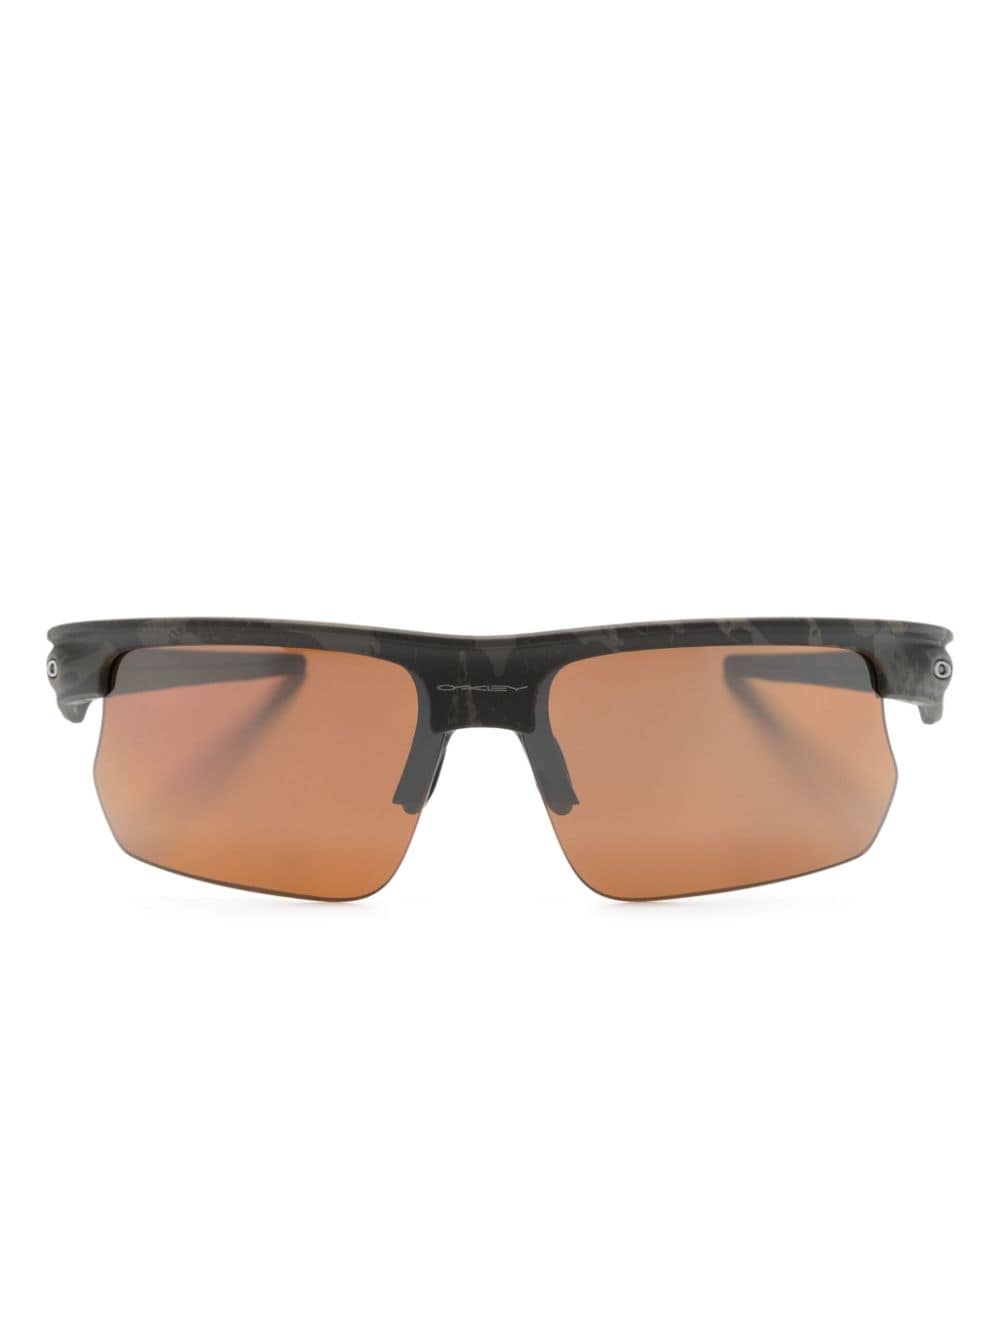 BiSphaera? rectangle-frame performance sunglasses<BR/><BR/><BR/><BR/>